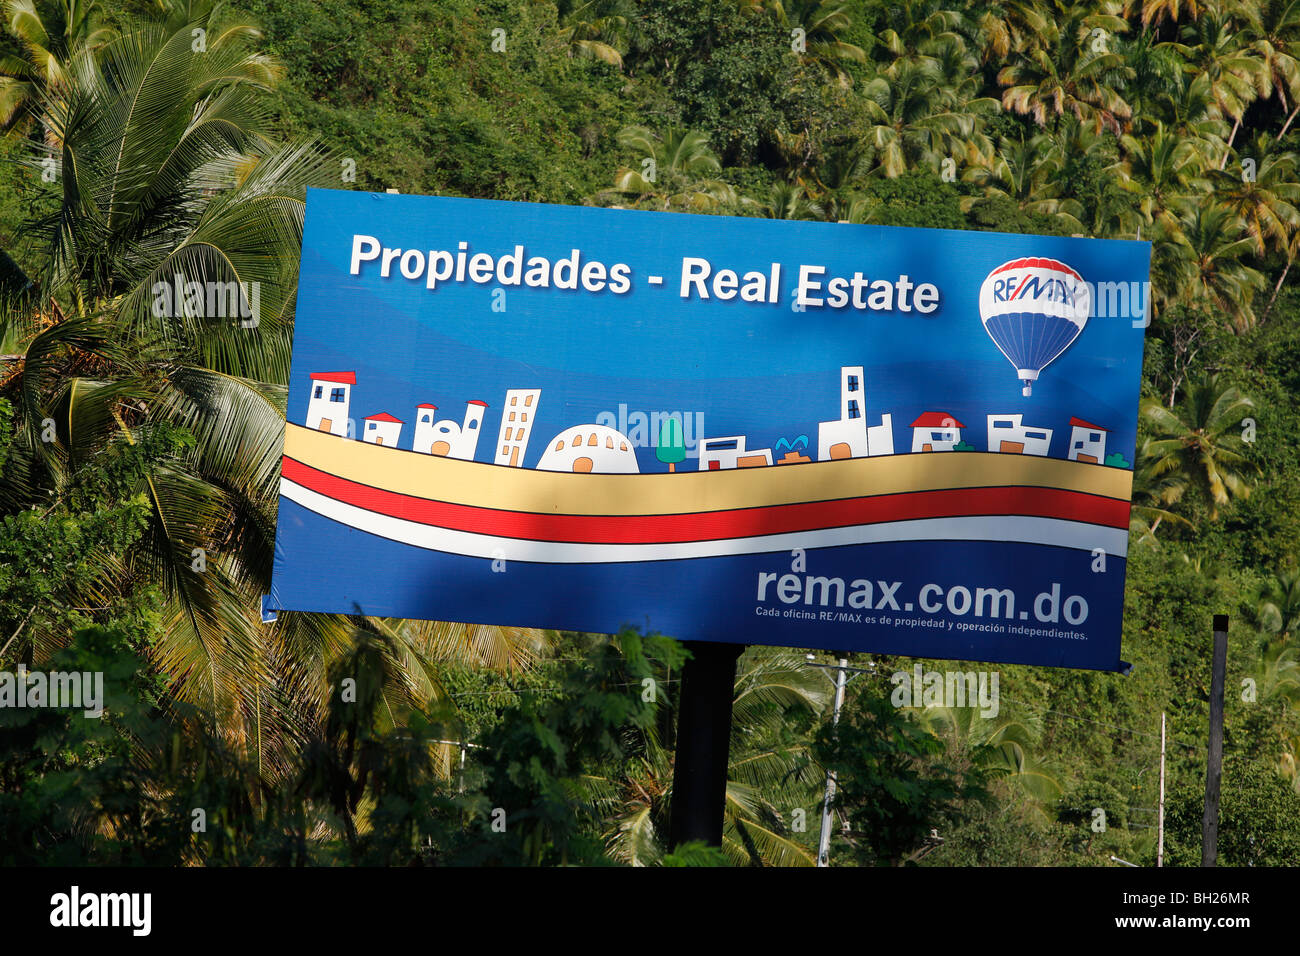 Real estate advertising, Dominican Republic Stock Photo